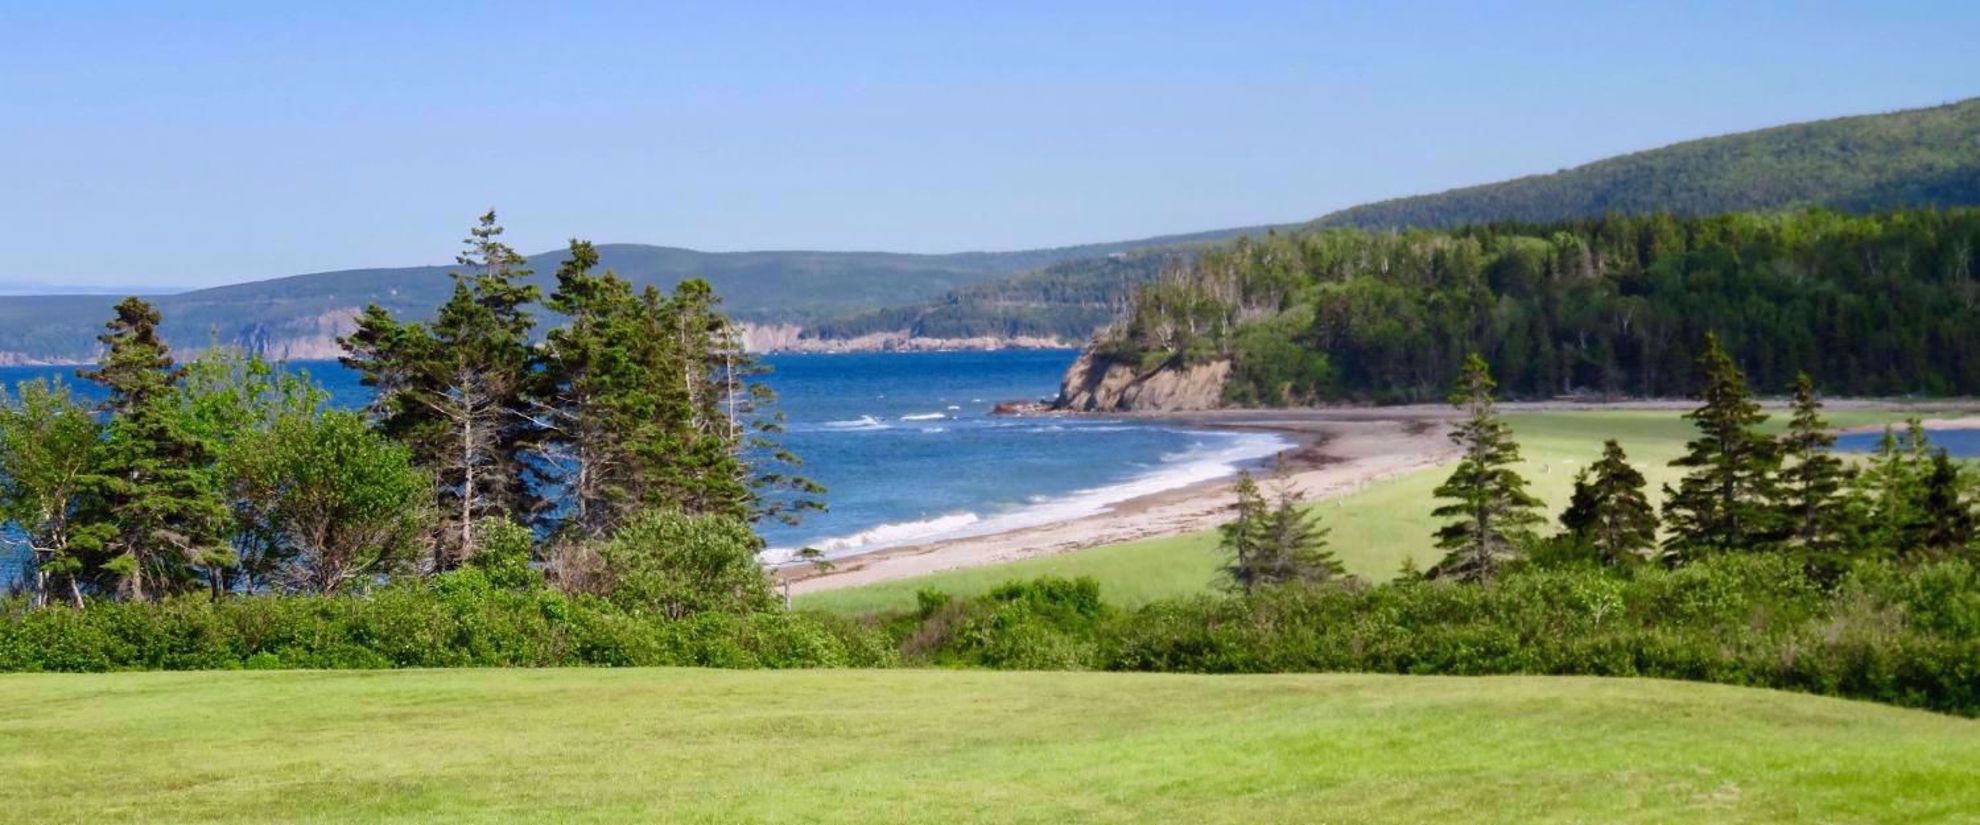 explore the wilderness of Nova Scotia on a women's small group tour